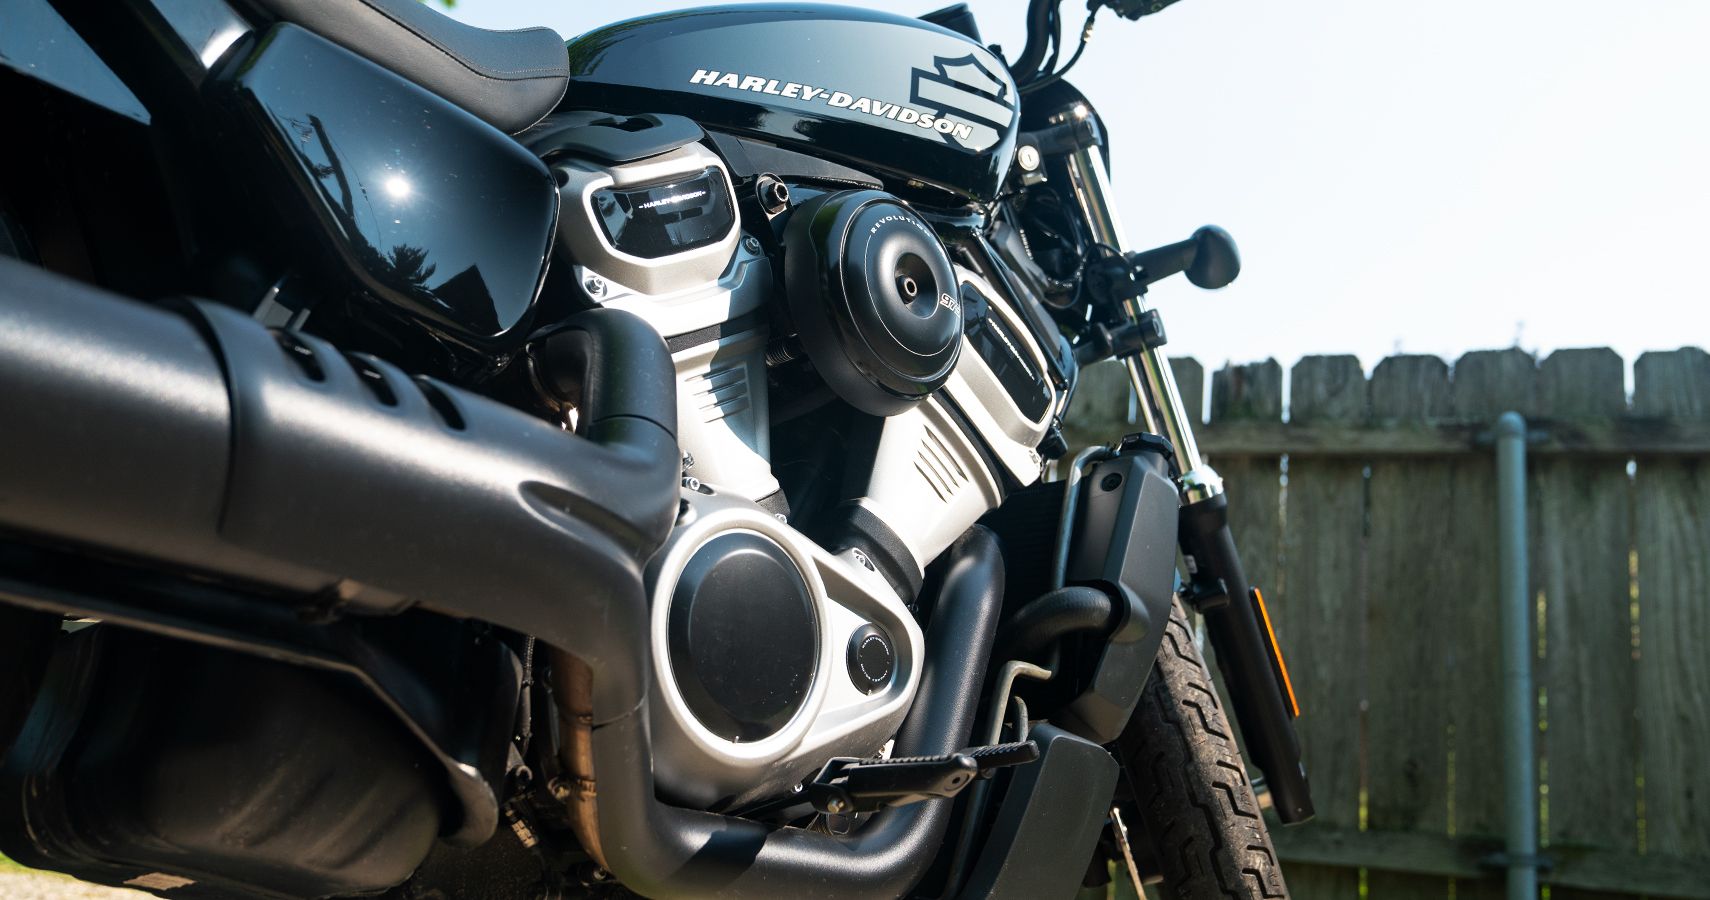 2022 Harley-Davidson Nightster engine